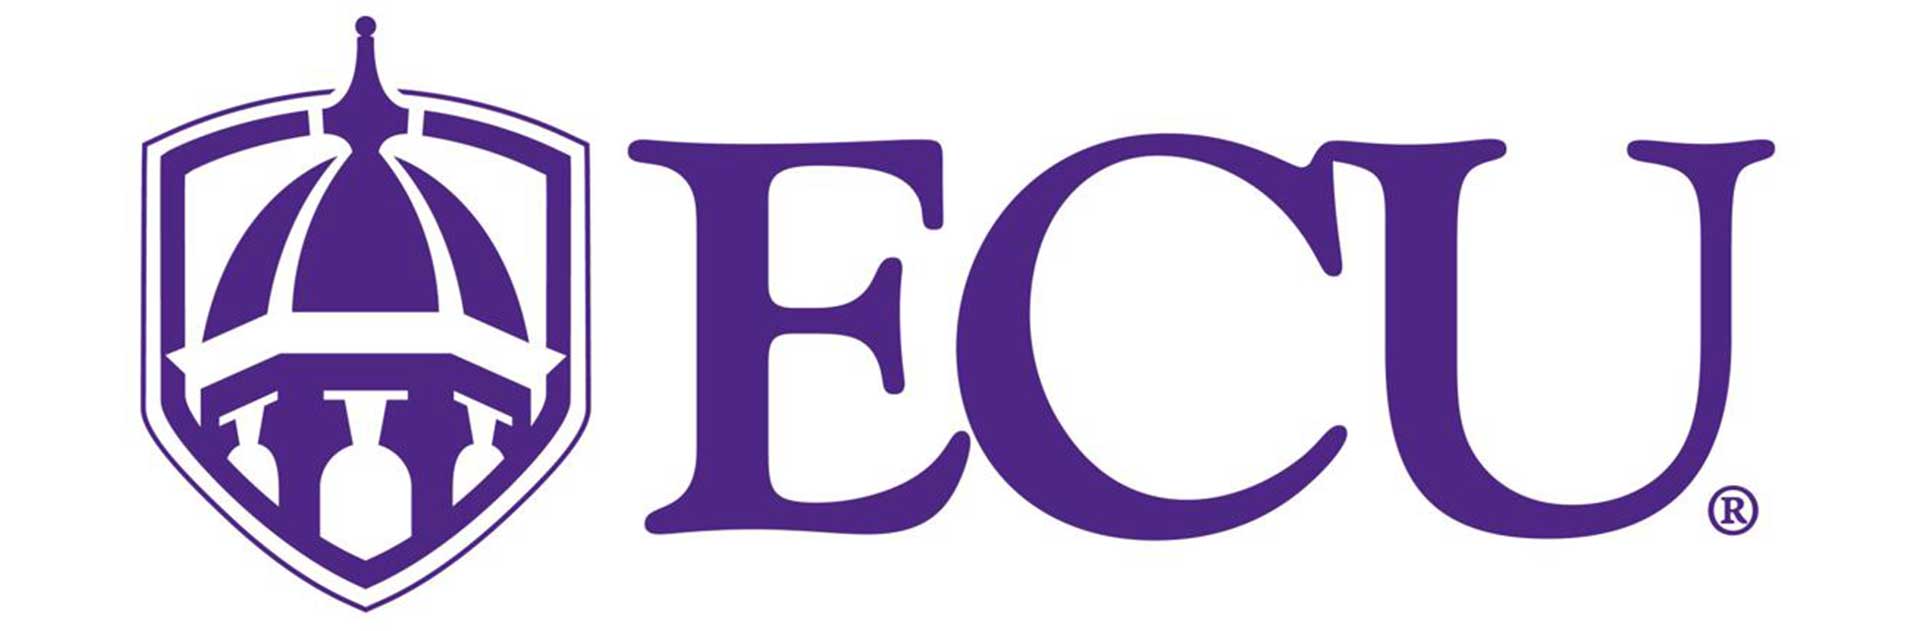 ECU-Logo